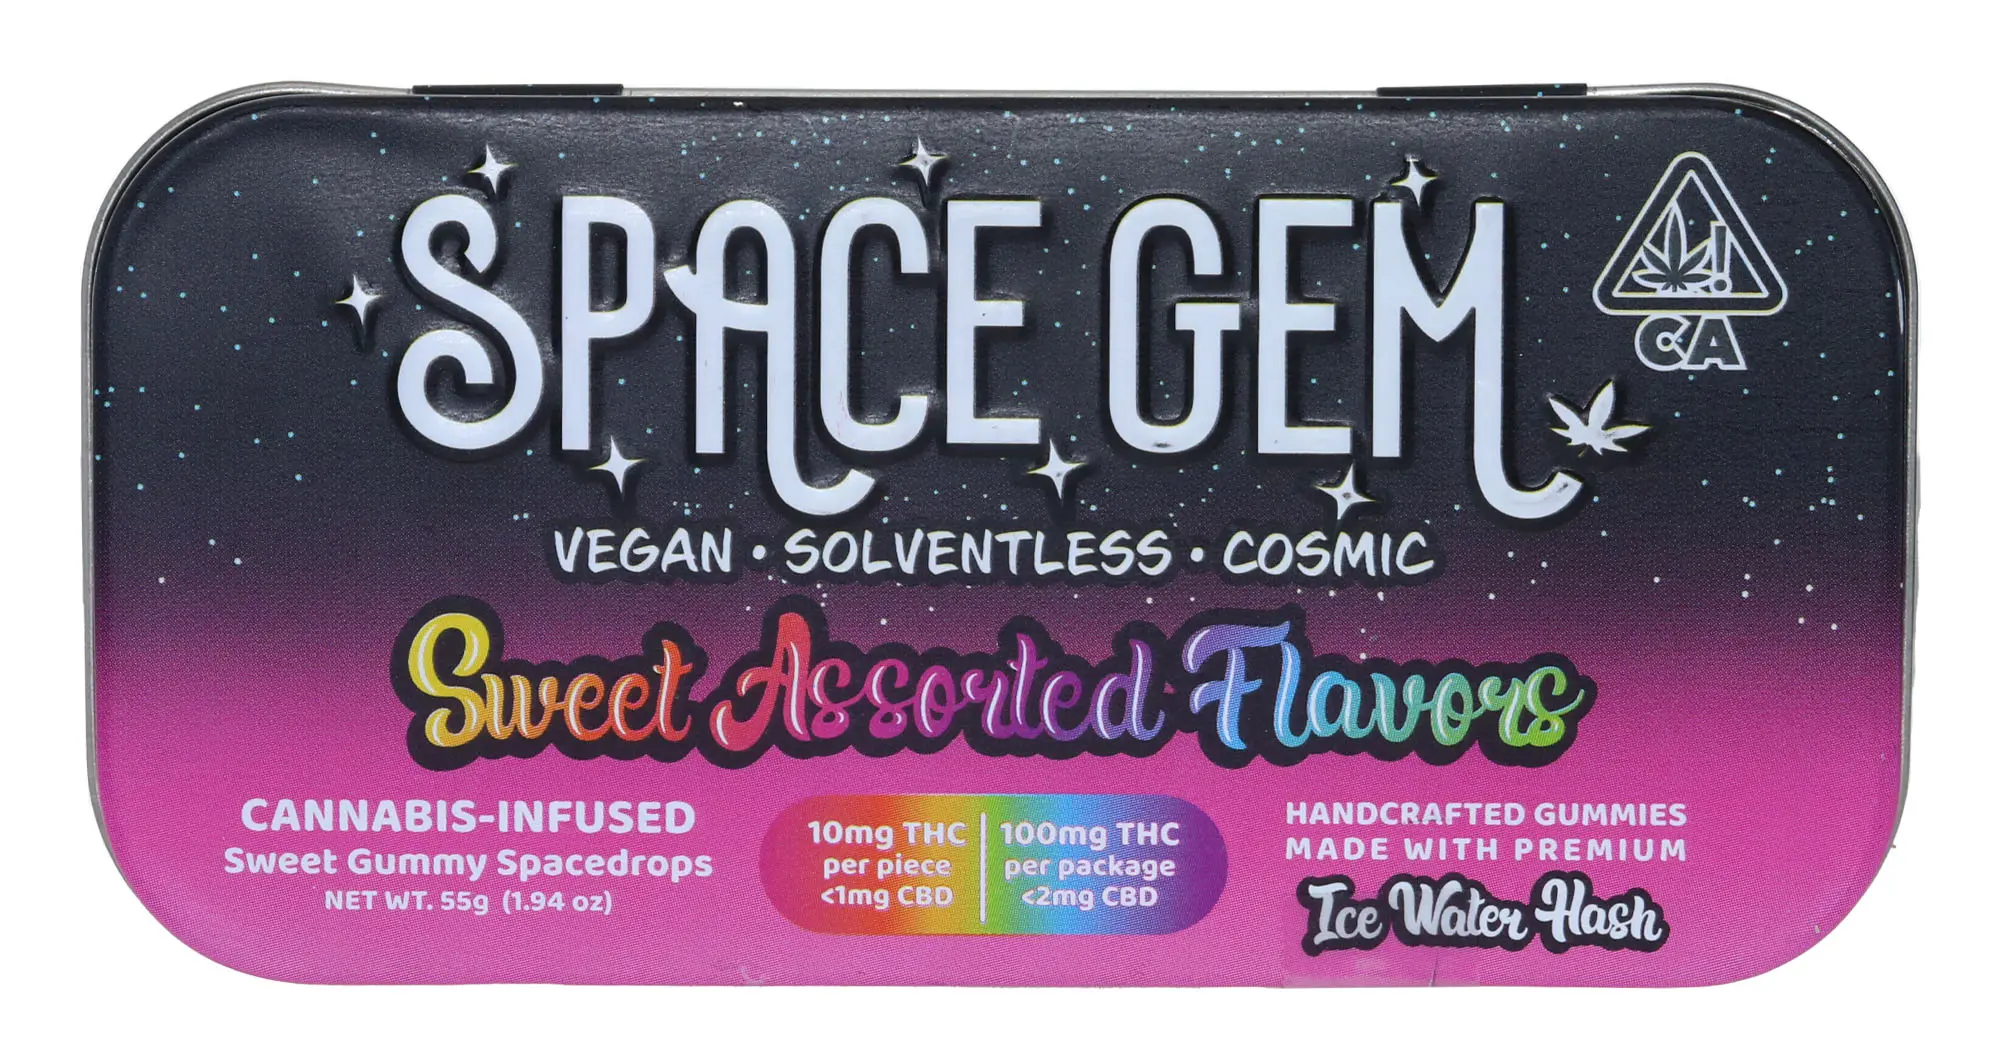 Sweet Gummy SpaceDrops